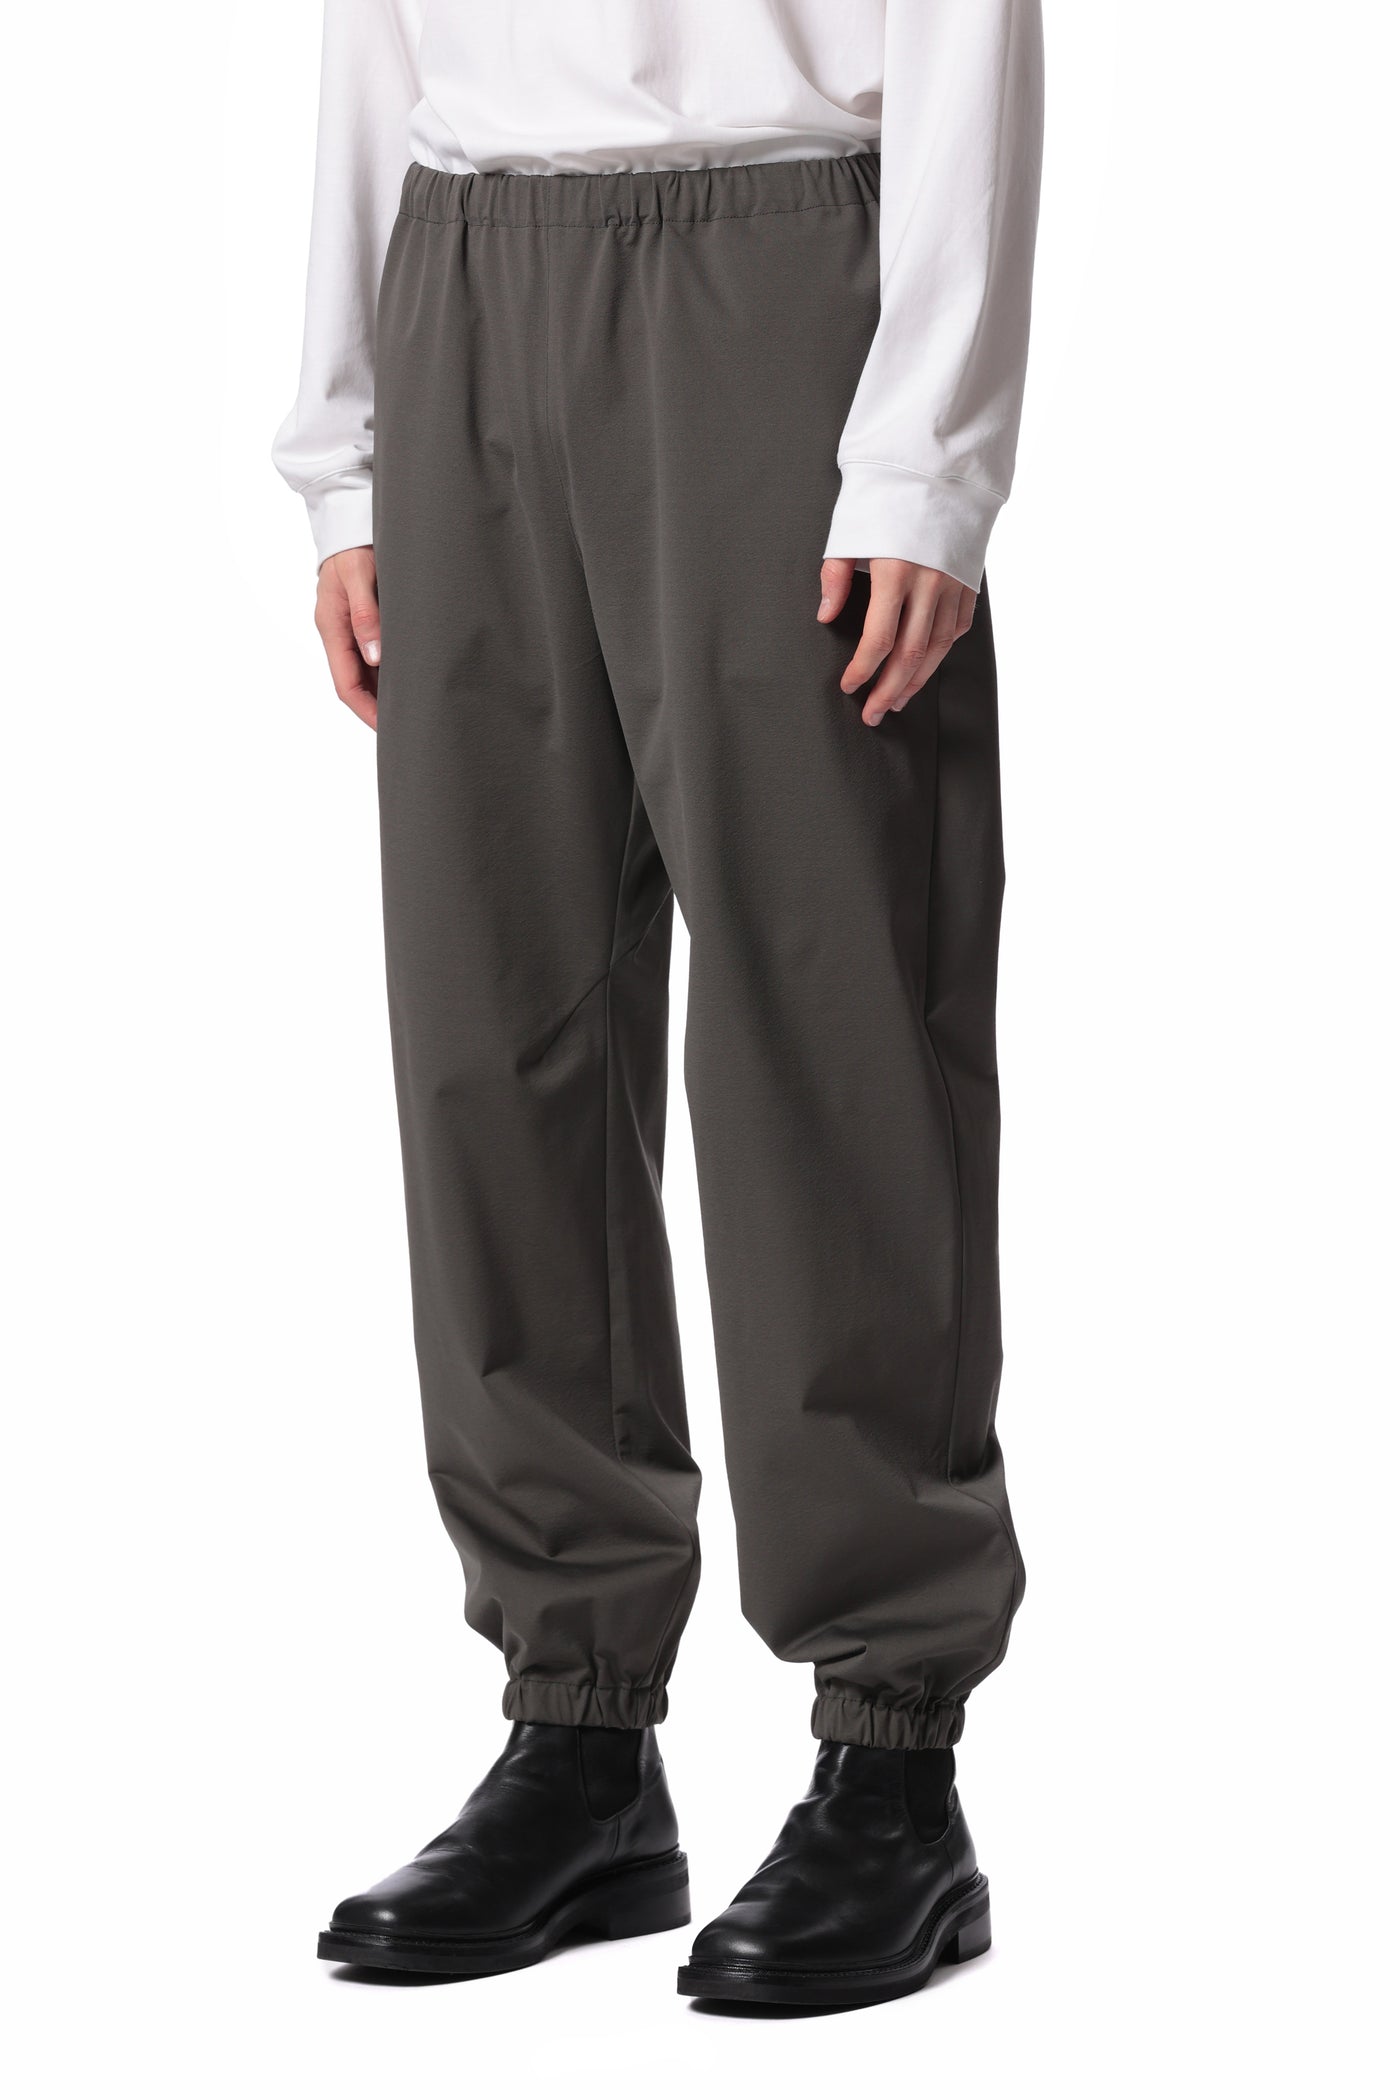 AP41-005 Polyester high gauge jersey wide jogger pants